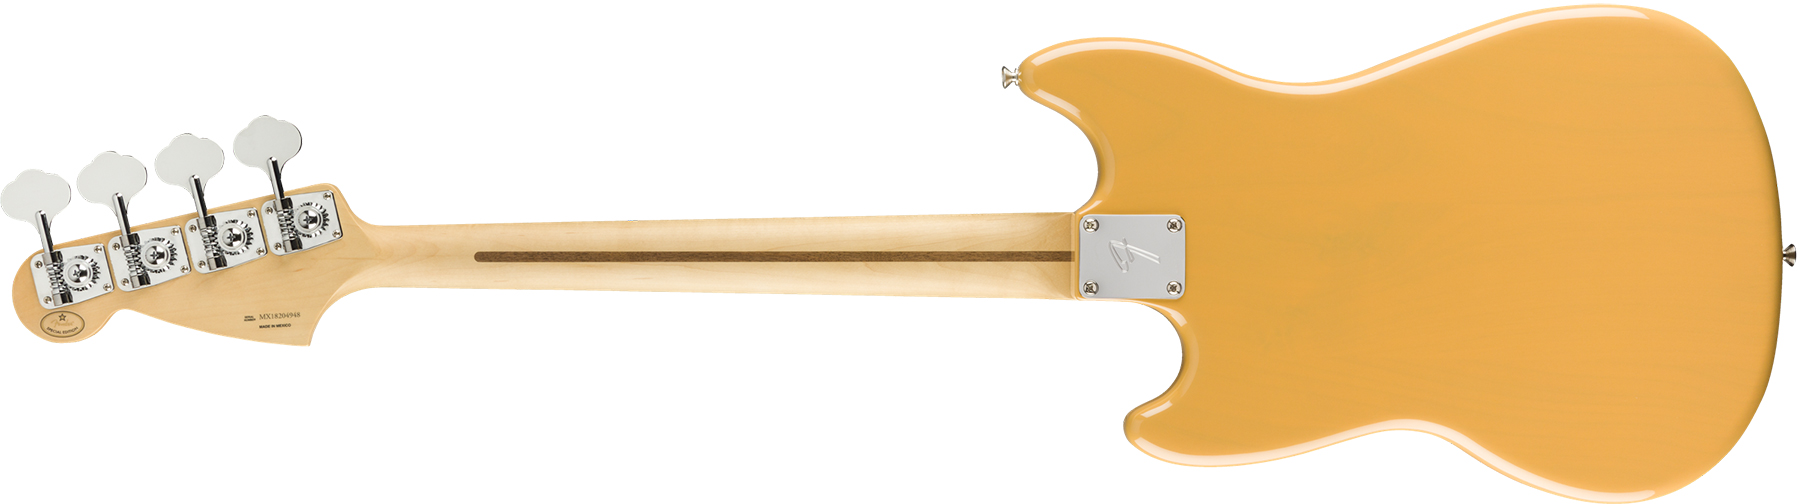 Fender Mustang Bass Pj Player Ltd Mex Mn - Butterscotch Blonde - Basse Électrique Enfants - Variation 1